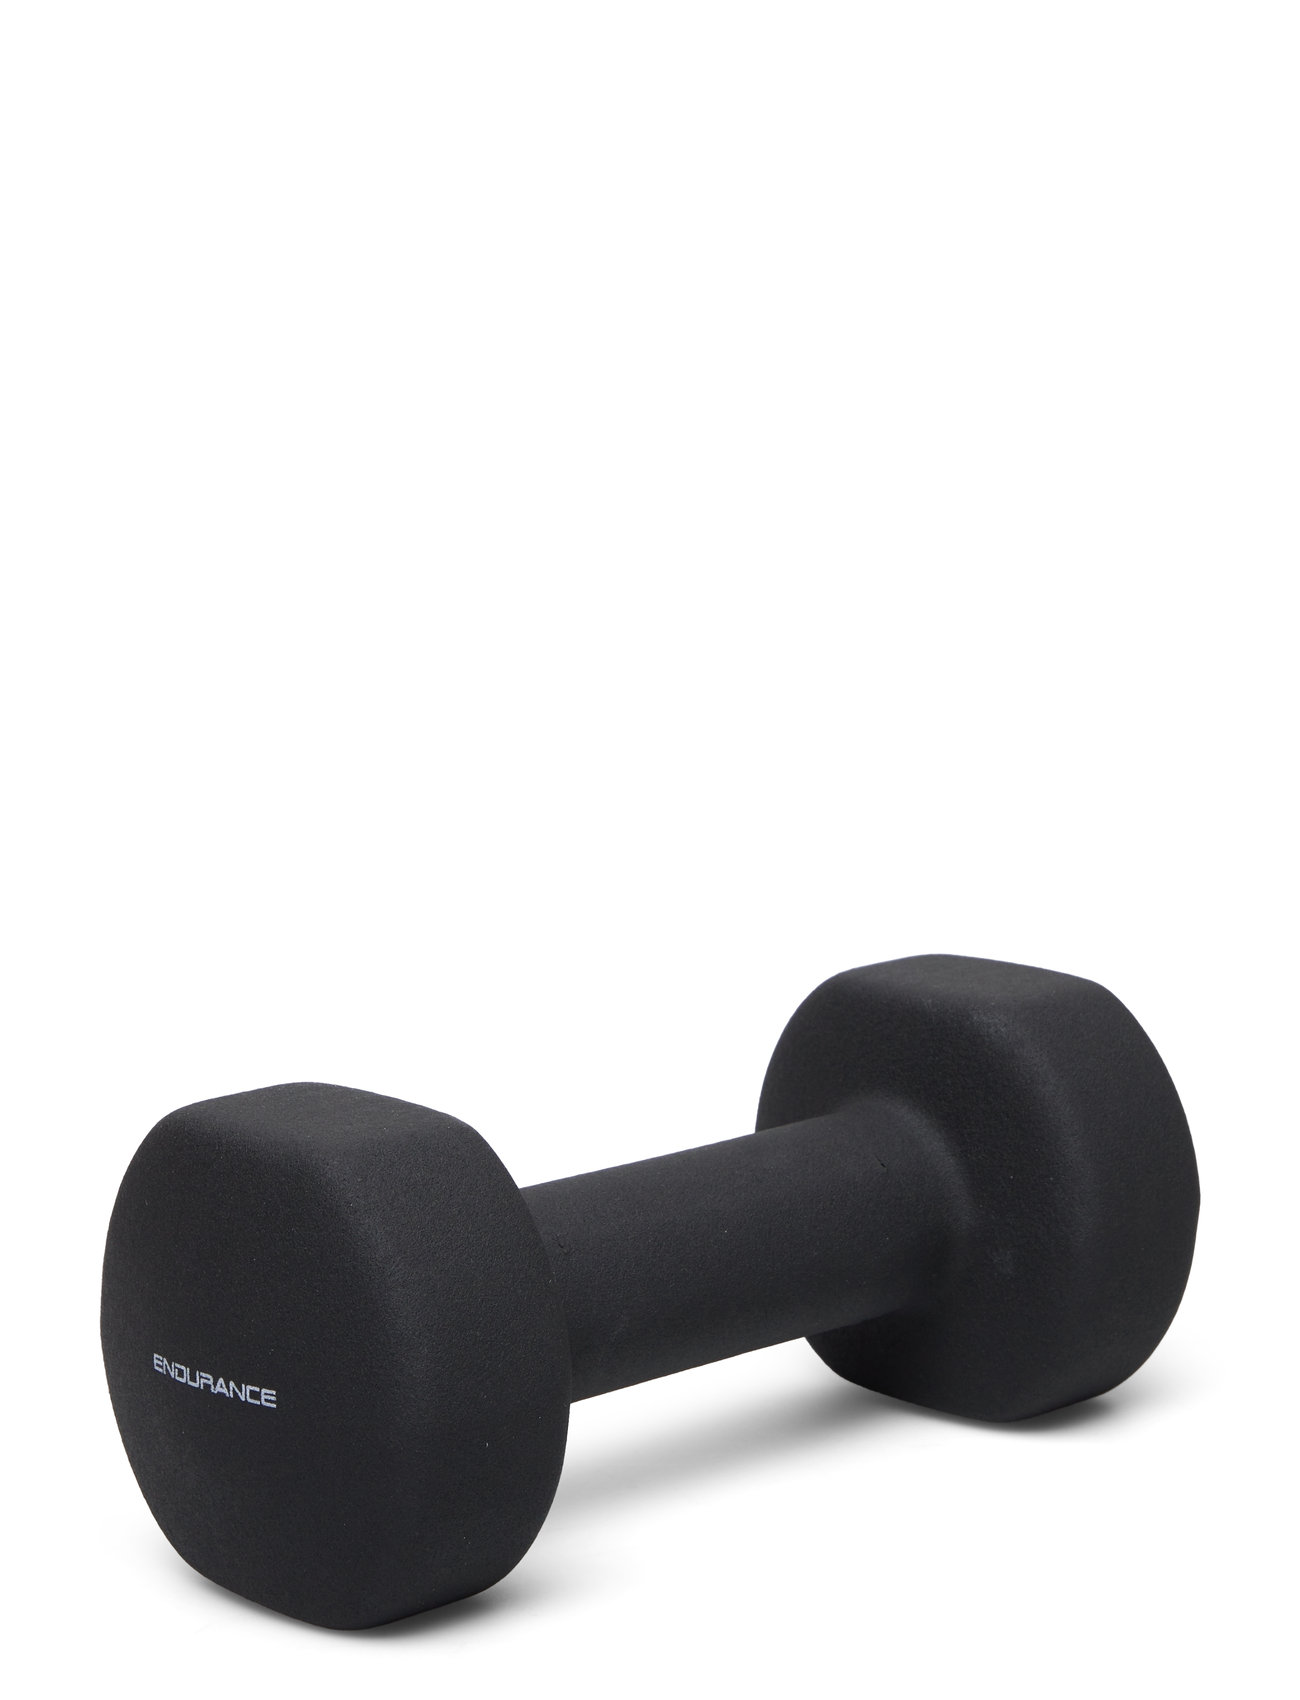 Dumbbell 5 Kg Sport Sports Equipment Workout Equipment Gym Weights Black Endurance